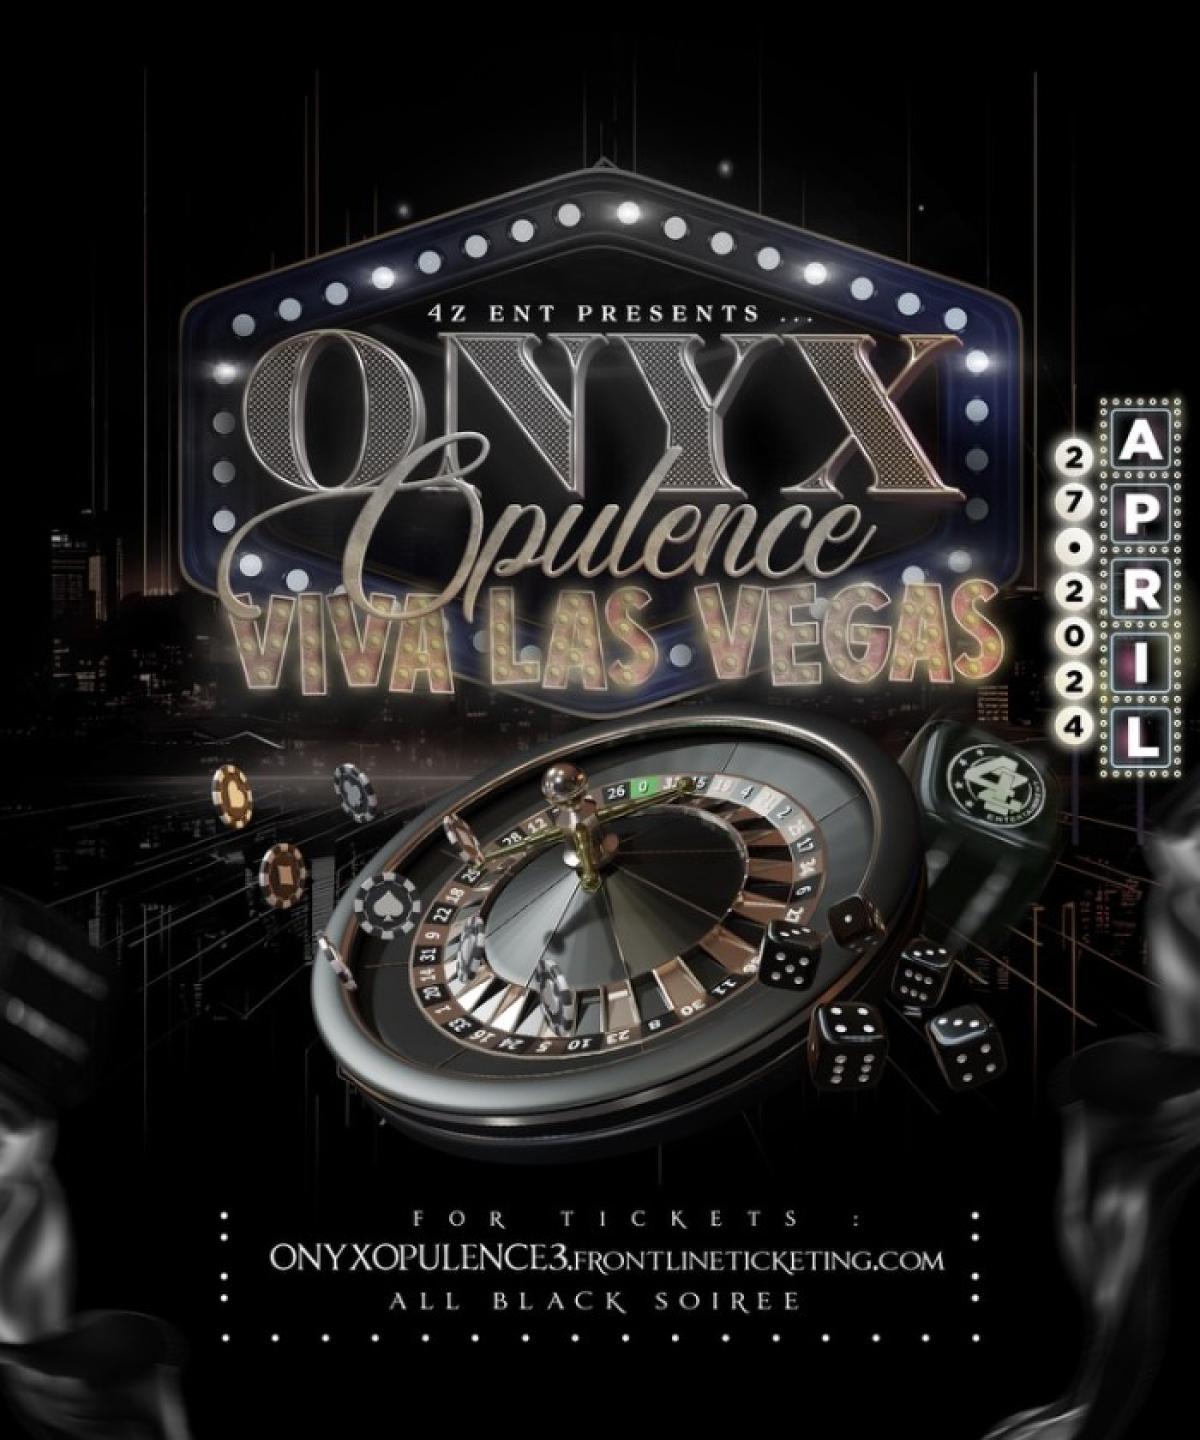 Onyx Opulence “Viva Las Vegas” flyer or graphic.